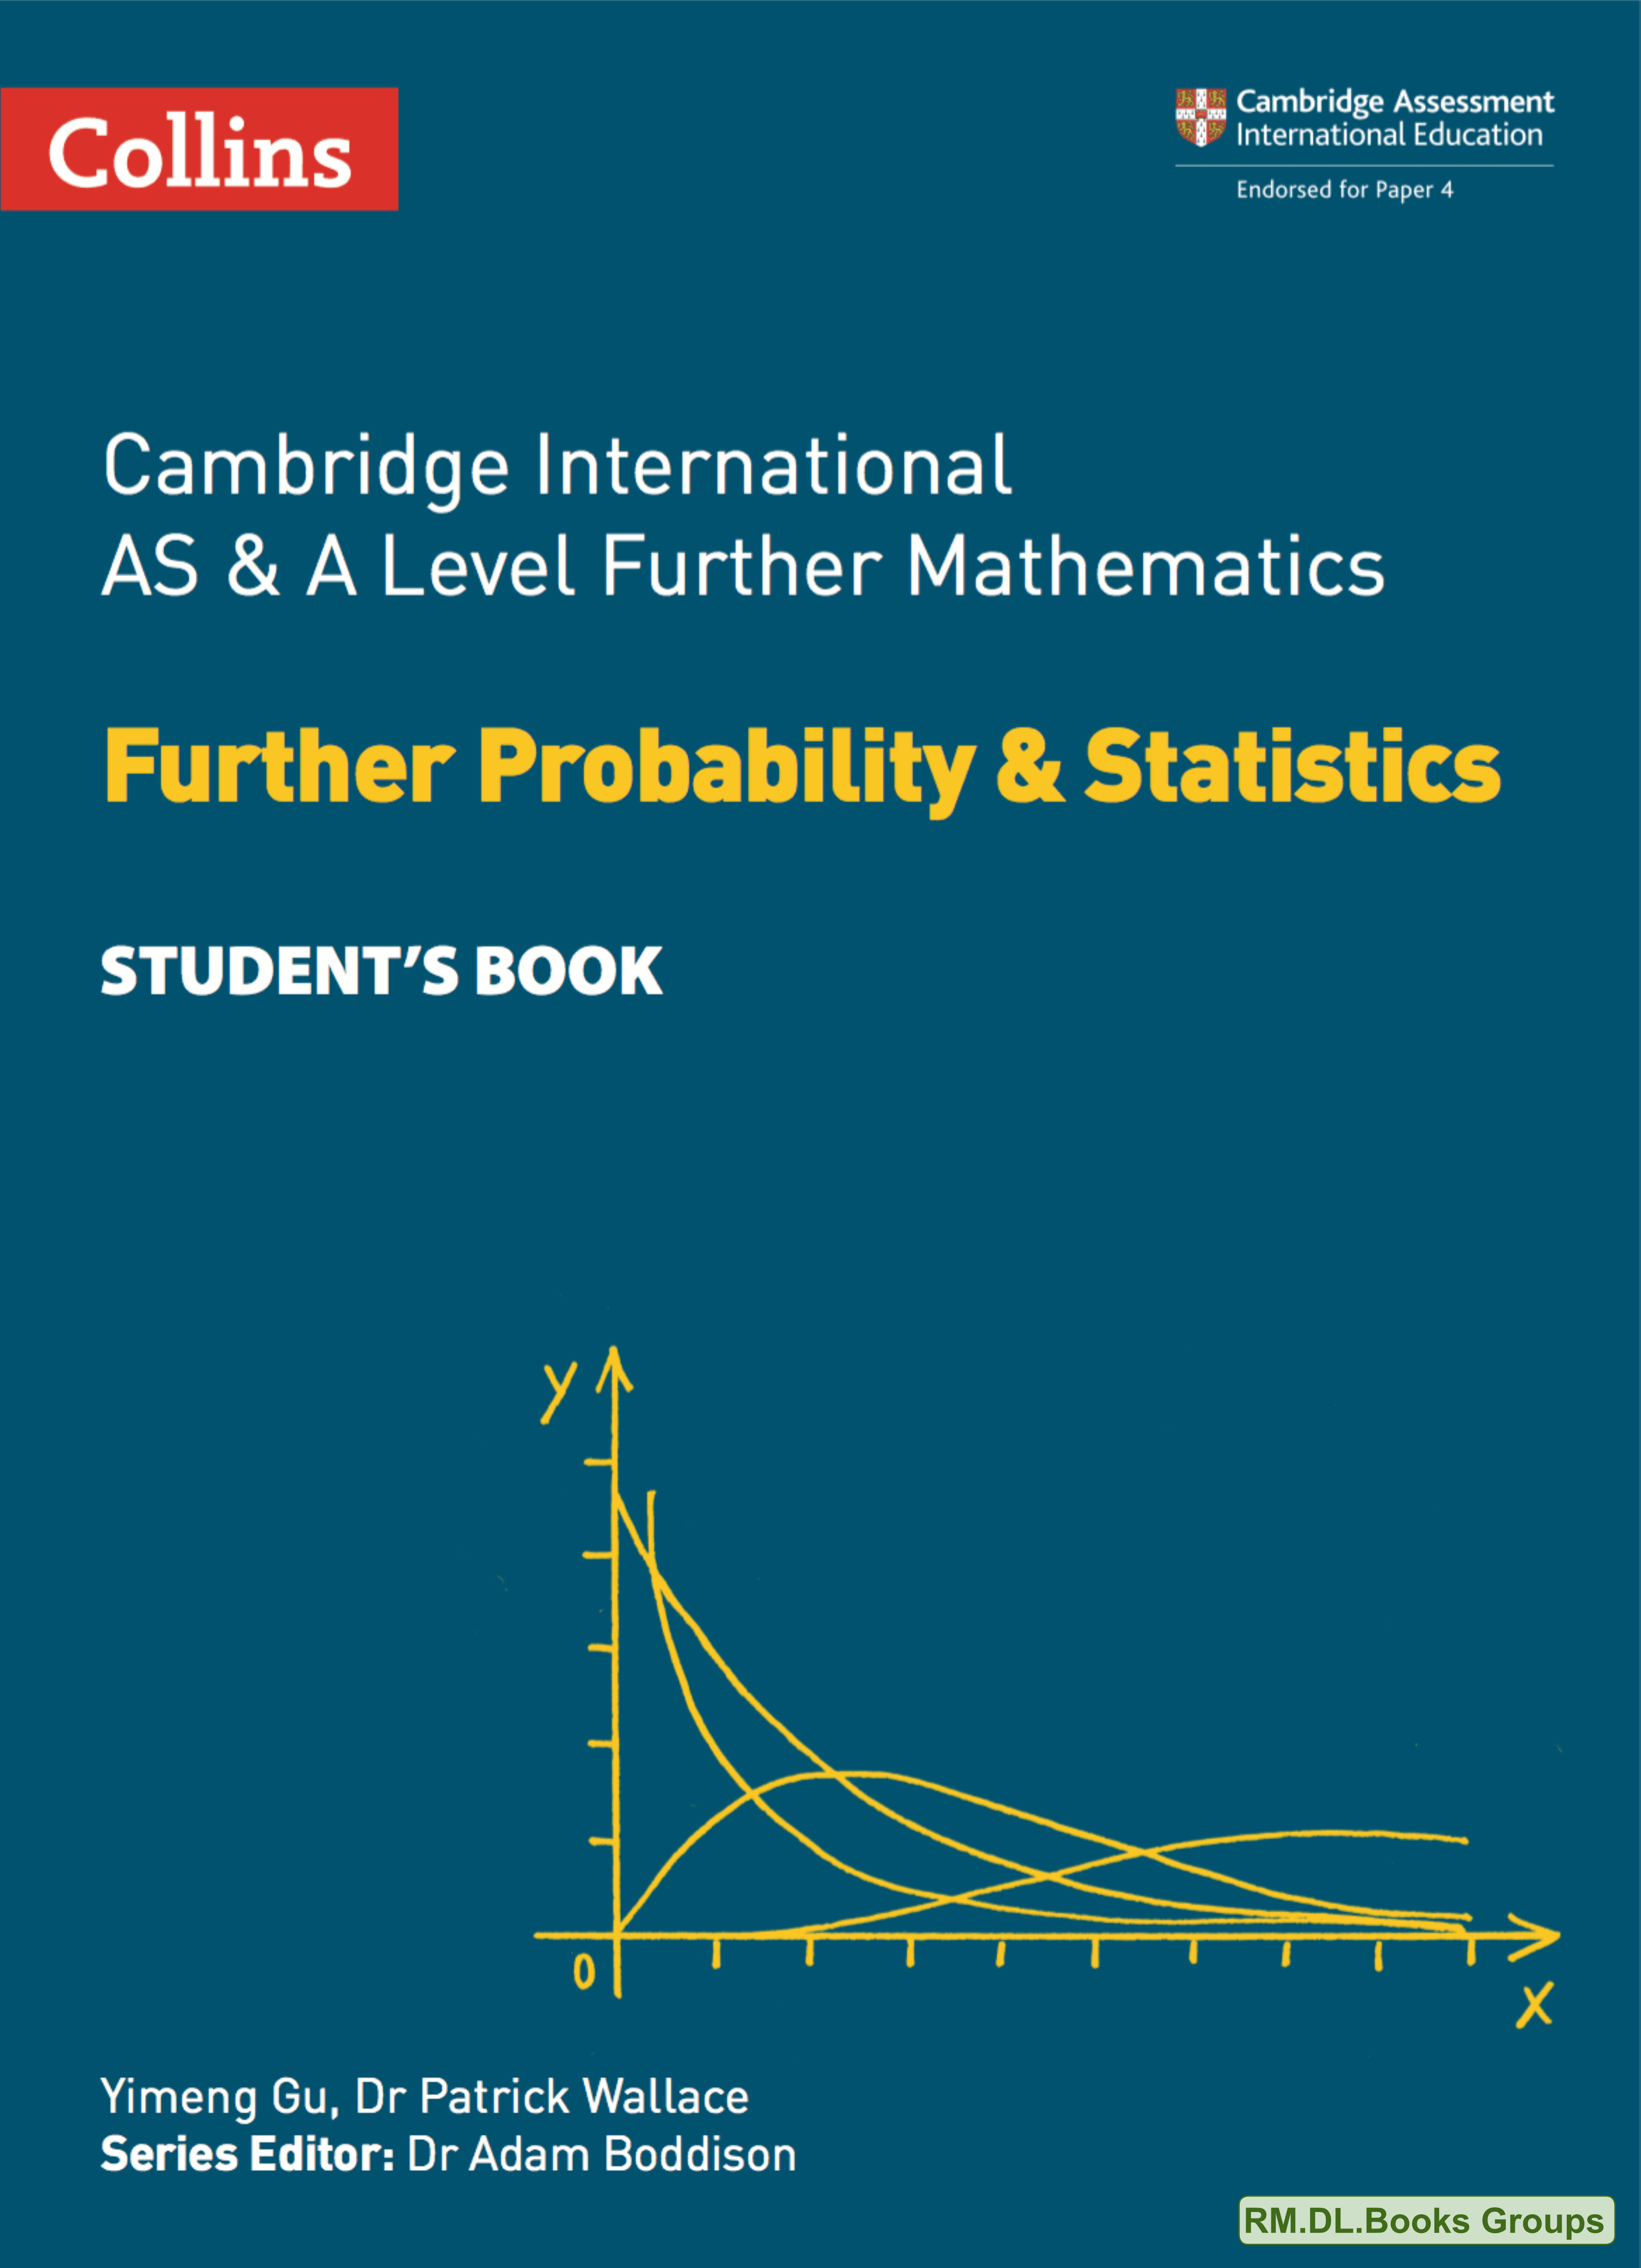 [Sách] Collins Cambridge International AS & A Level Further Mathematics